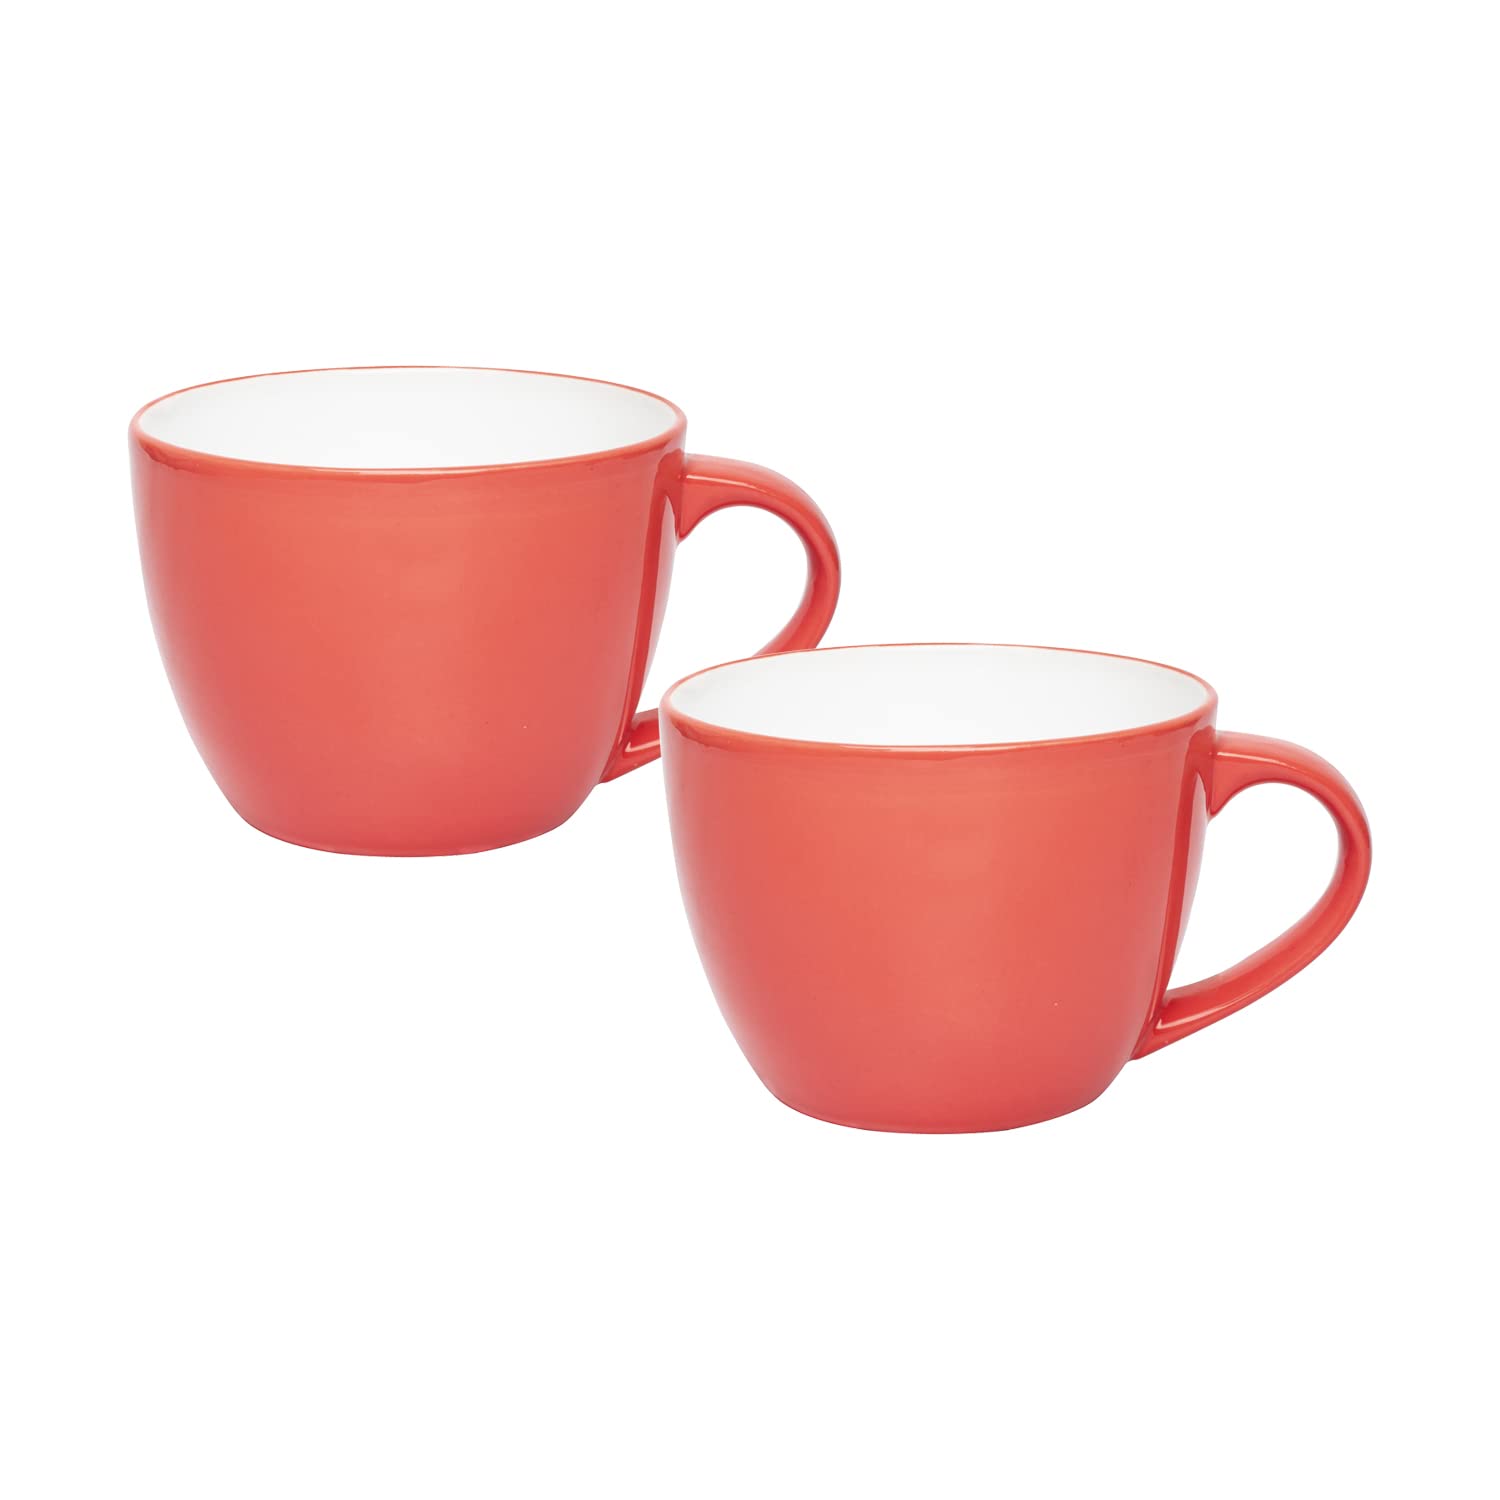 Indian Ceramic Jumbo Coffee Mug - 400 ML - Red, Set of 1